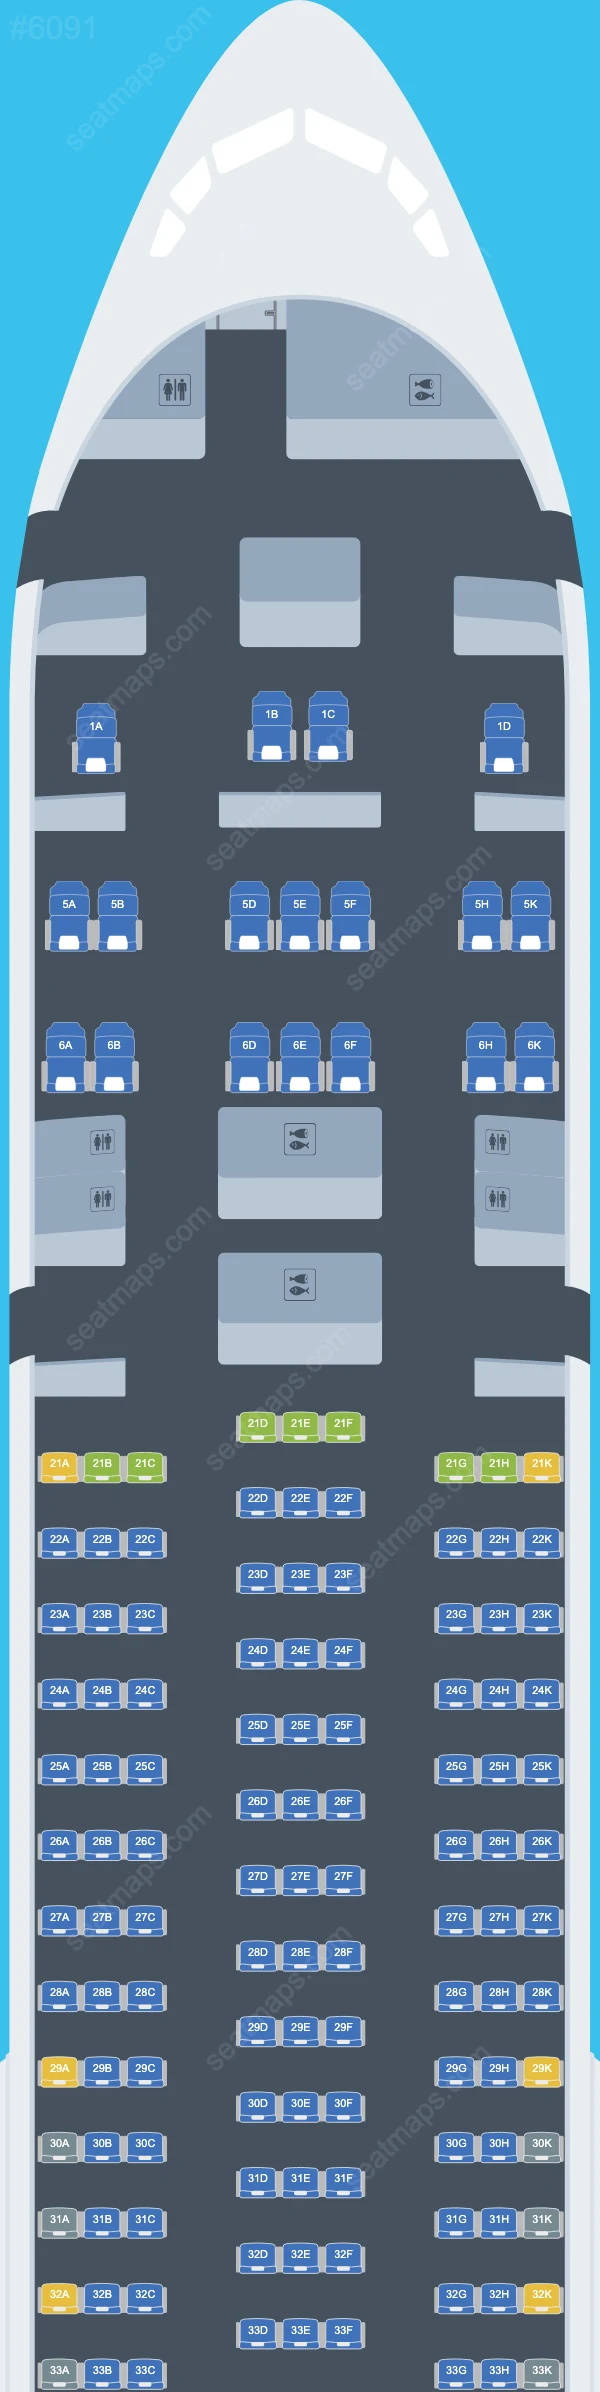 Rossiya Boeing 777 Seat Maps 777-300